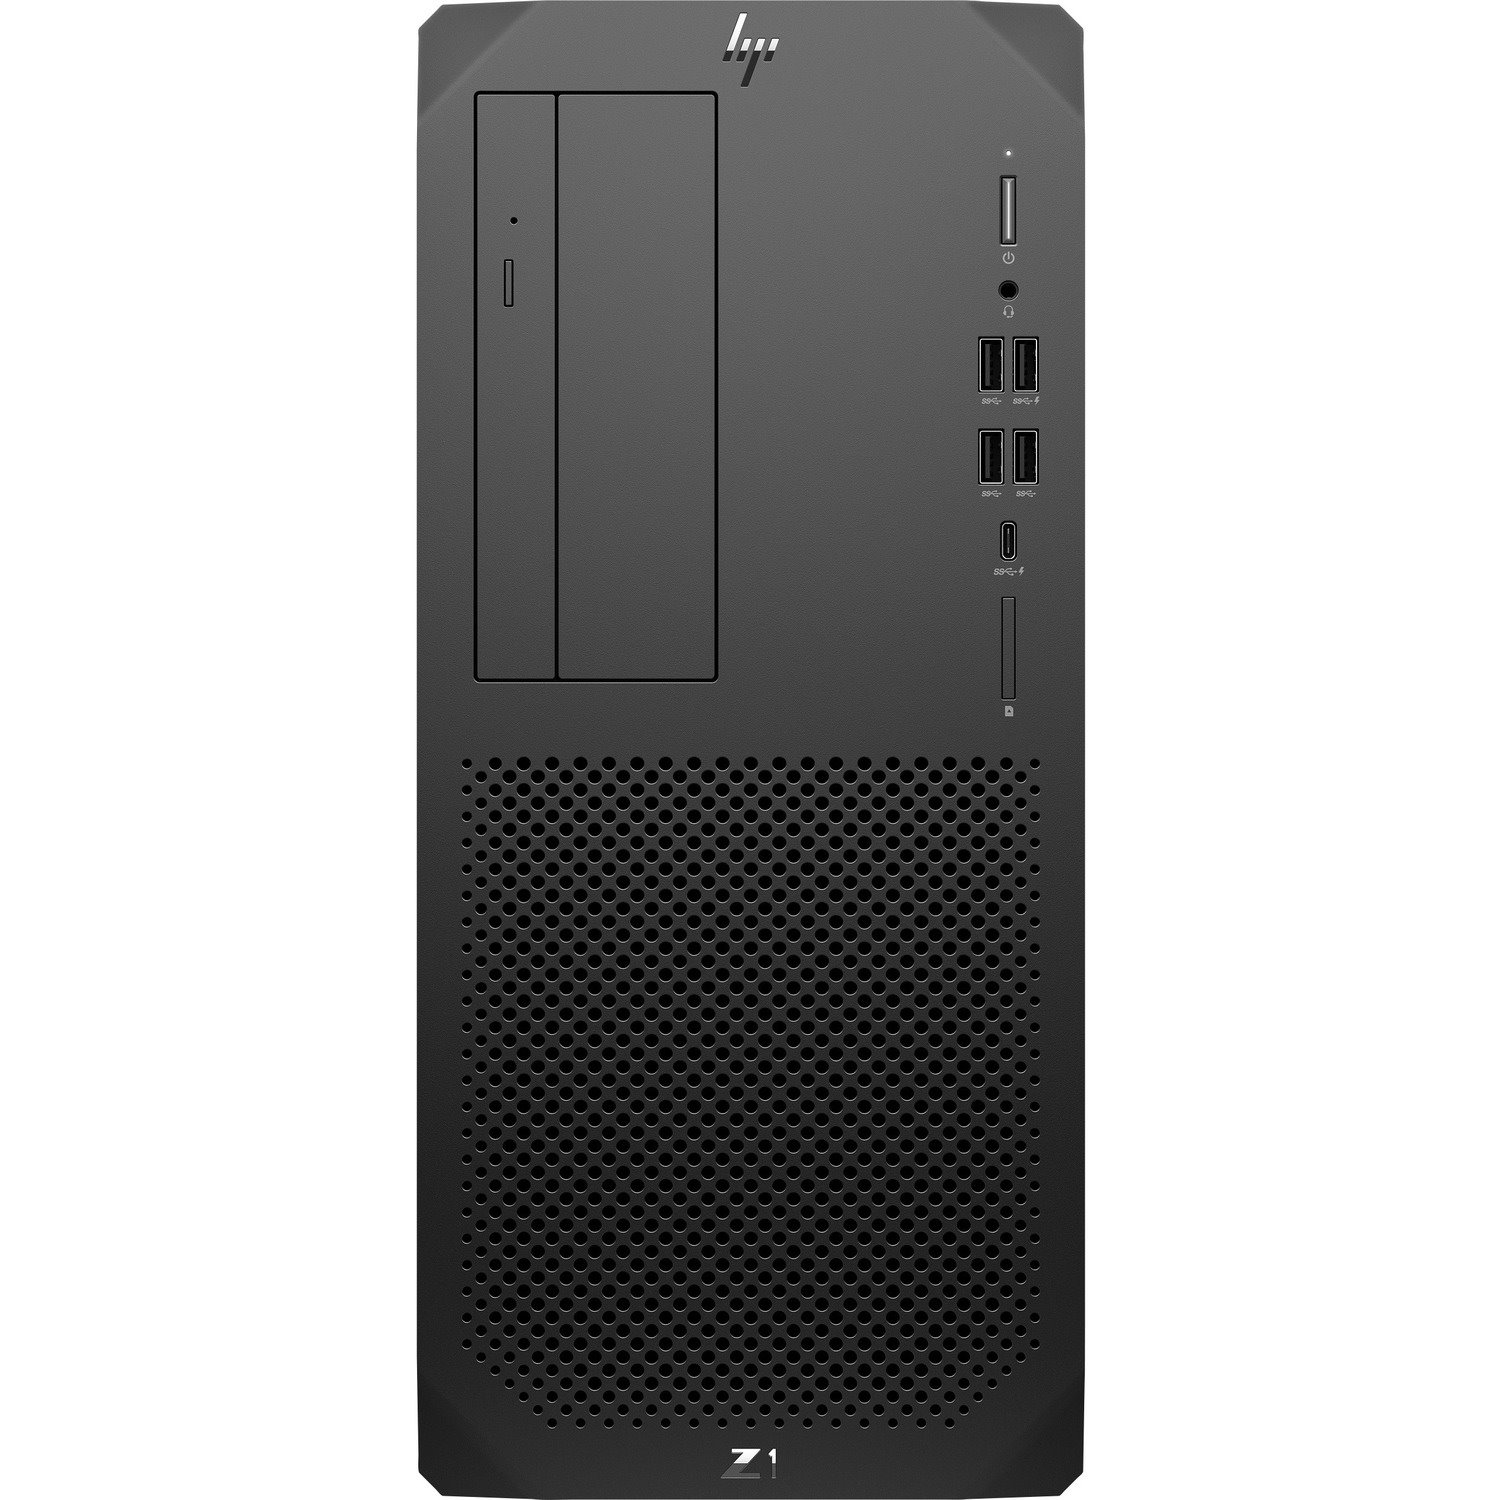 HP Z1 G6 Workstation - Intel Core i9 10th Gen i9-10900K - 32 GB - 2 TB HDD - 1 TB SSD - Tower